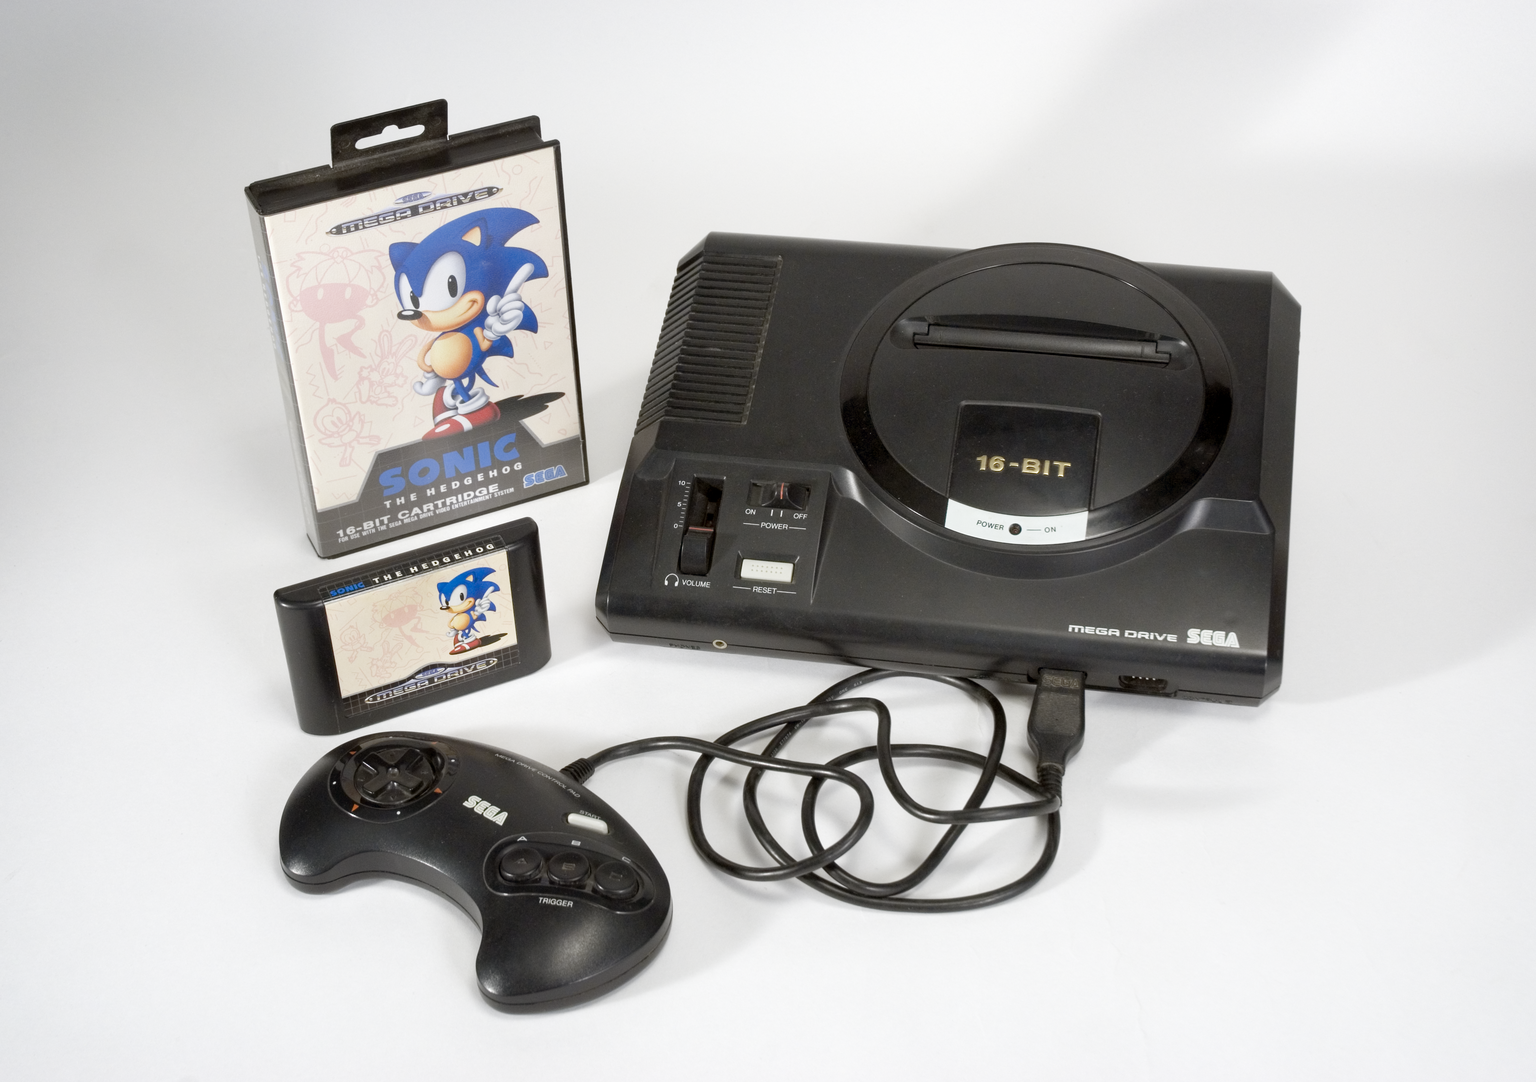 Sonic The Hedgehog games cartridge with 16-bit Mega-Drive 